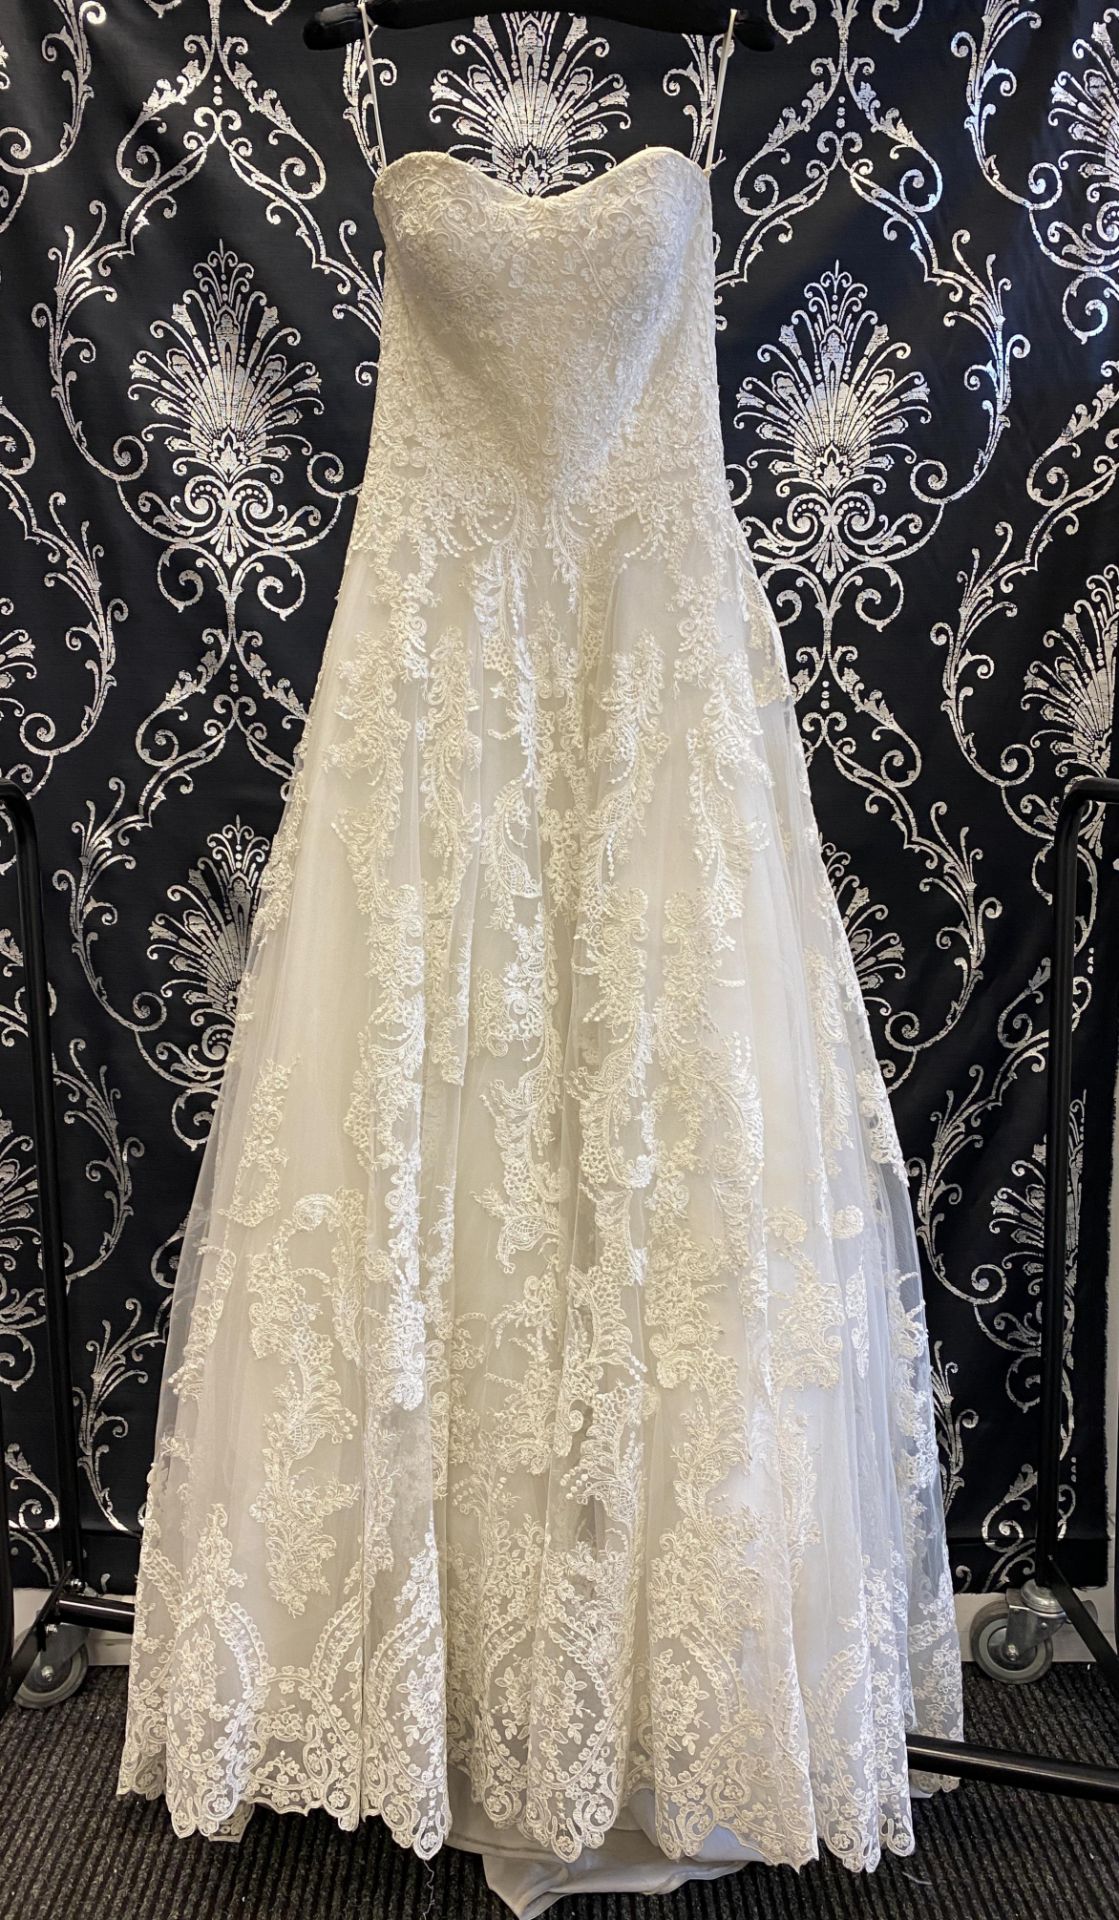 1 x MORI LEE '2787' Stunning Strapless Lace And Chiffon Designer Wedding Dress RRP £1,200 UK 12 - Image 10 of 12